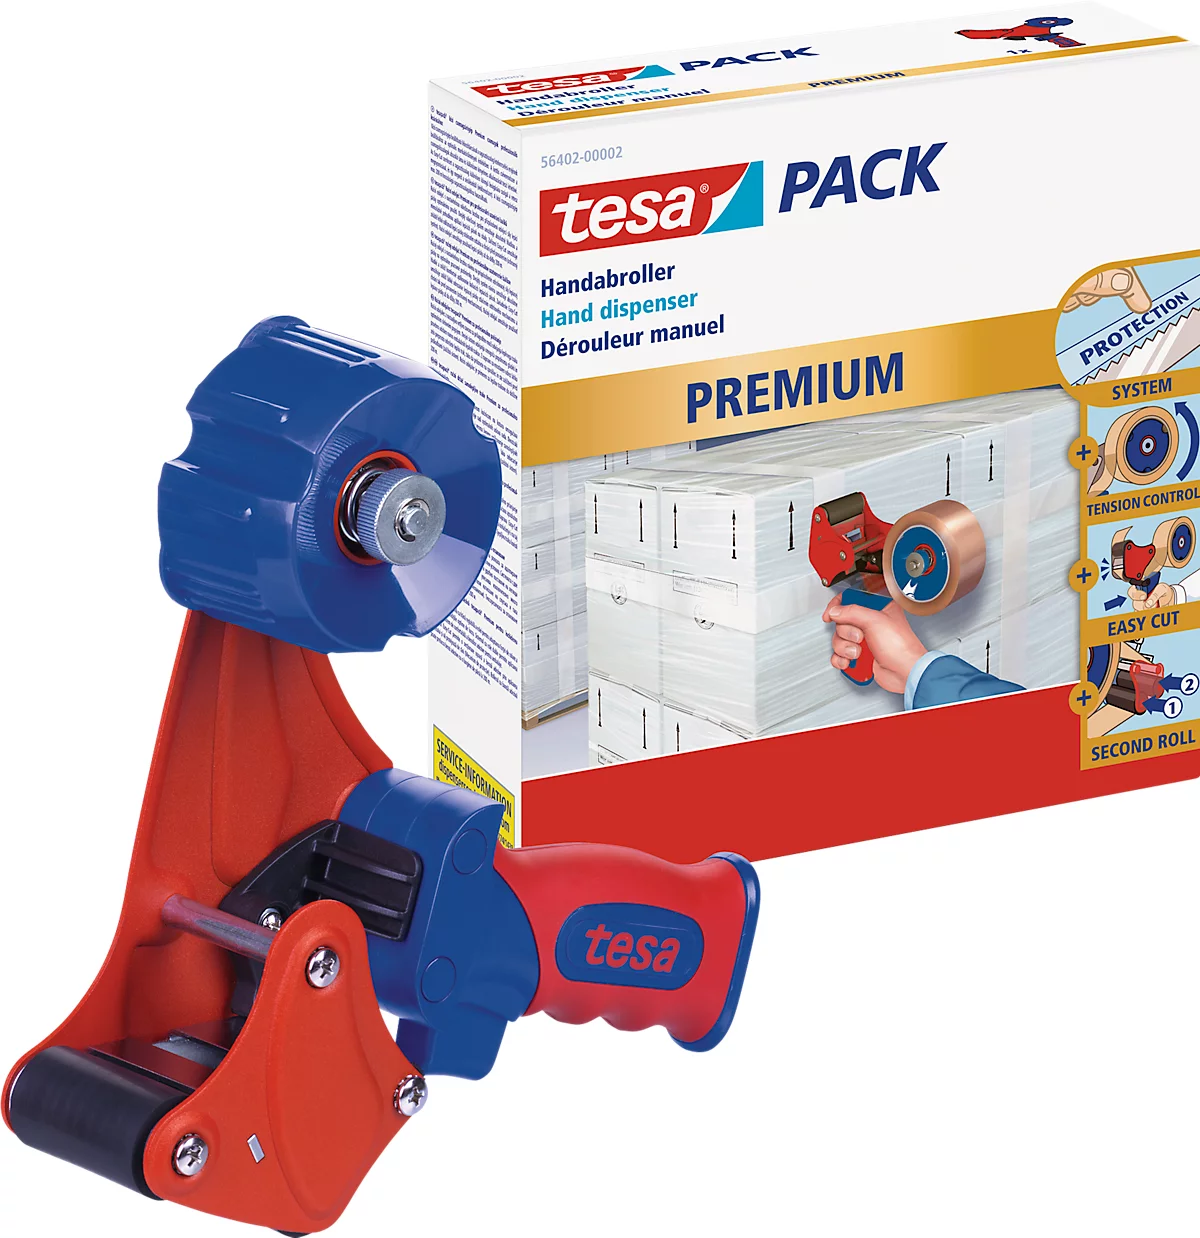 tesa® Packer dispensador manual 56402